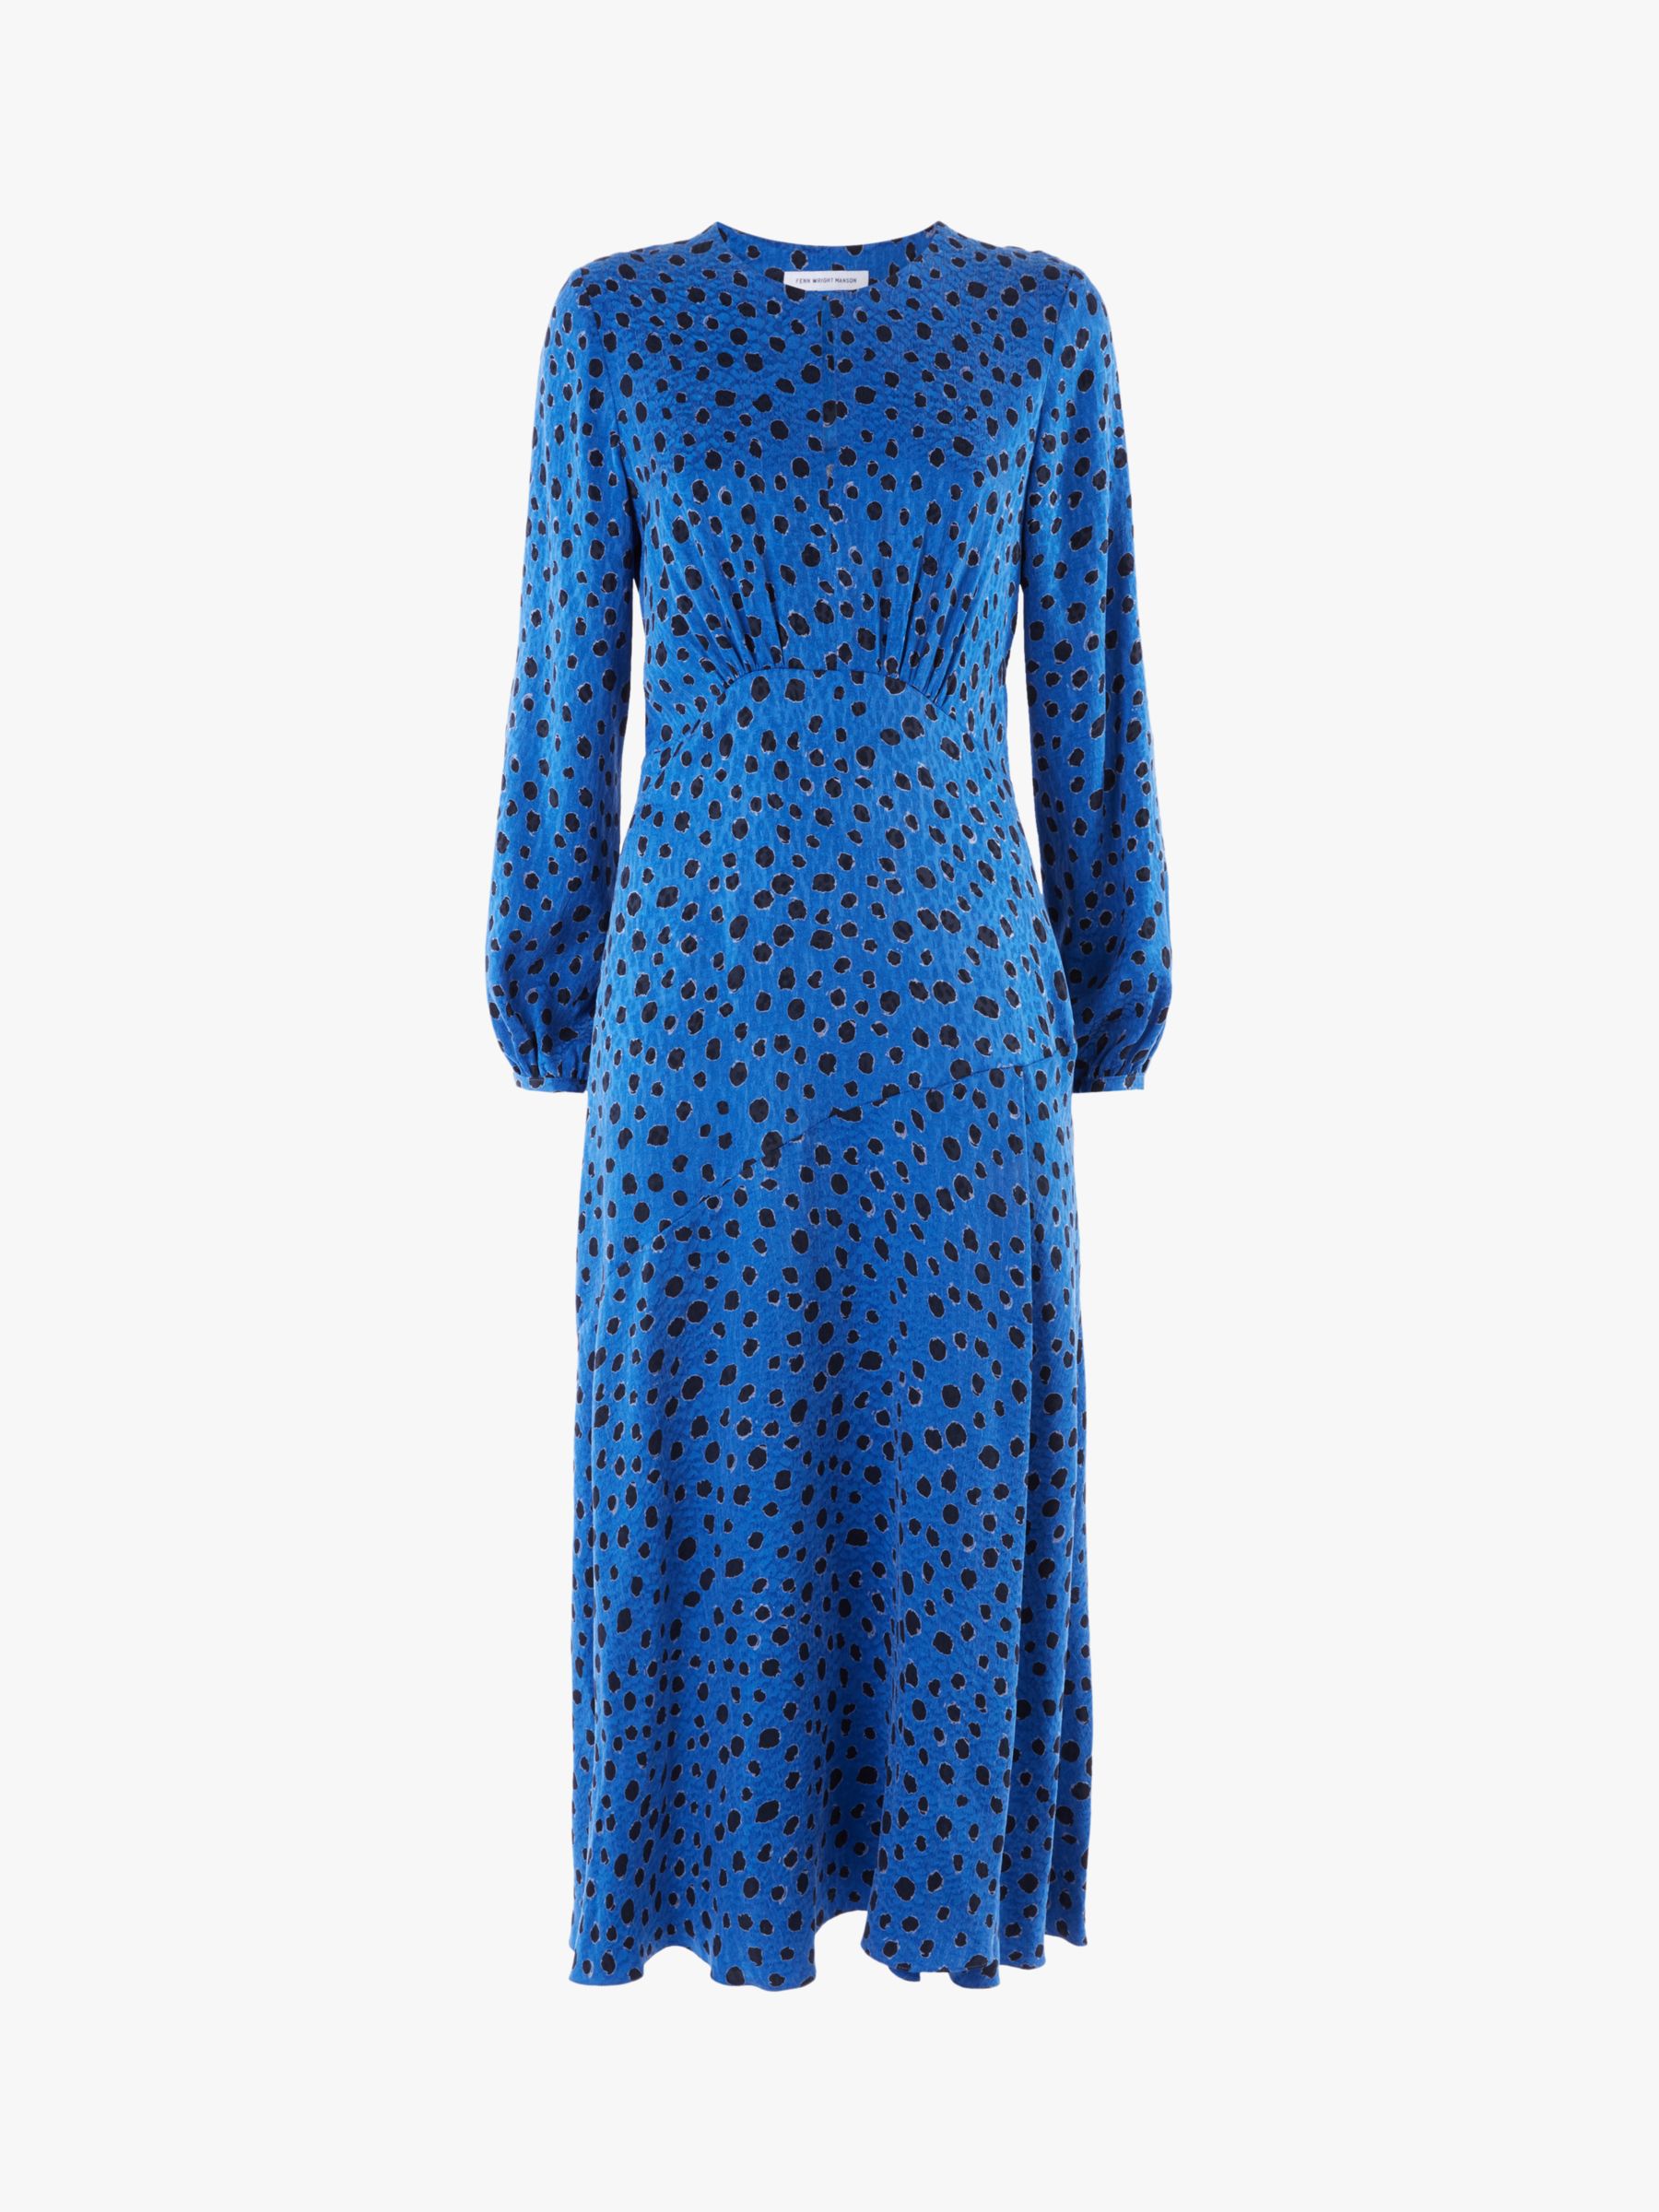 Fenn Wright Manson Flavie Spot Print Midi Dress, Blue/Black